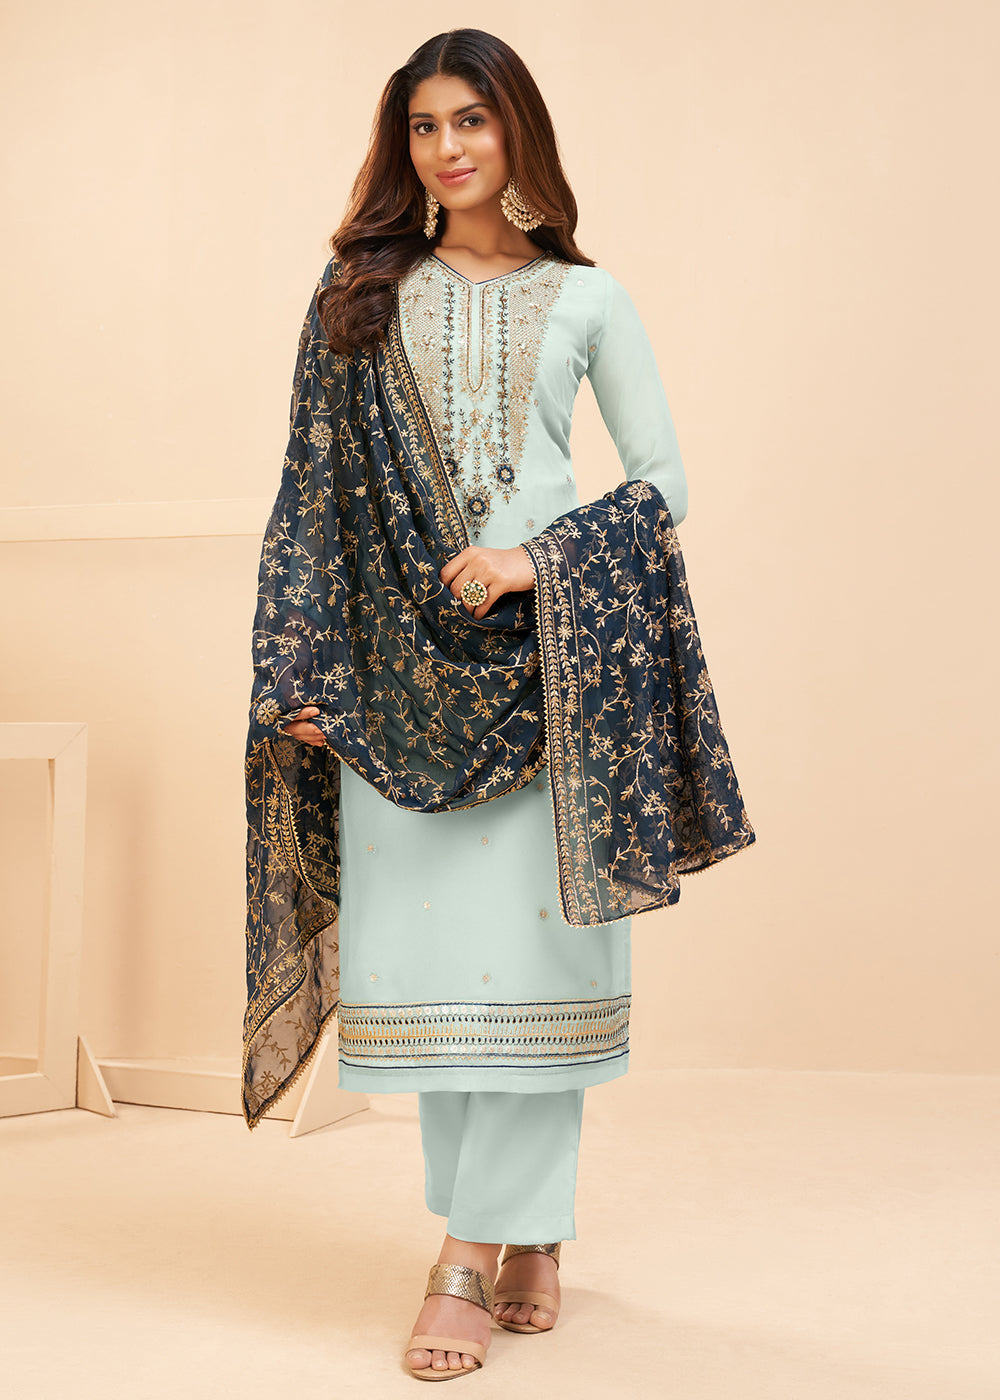 Buy Multi Thread Light Blue Suit - Party Wear Salwar Kameez